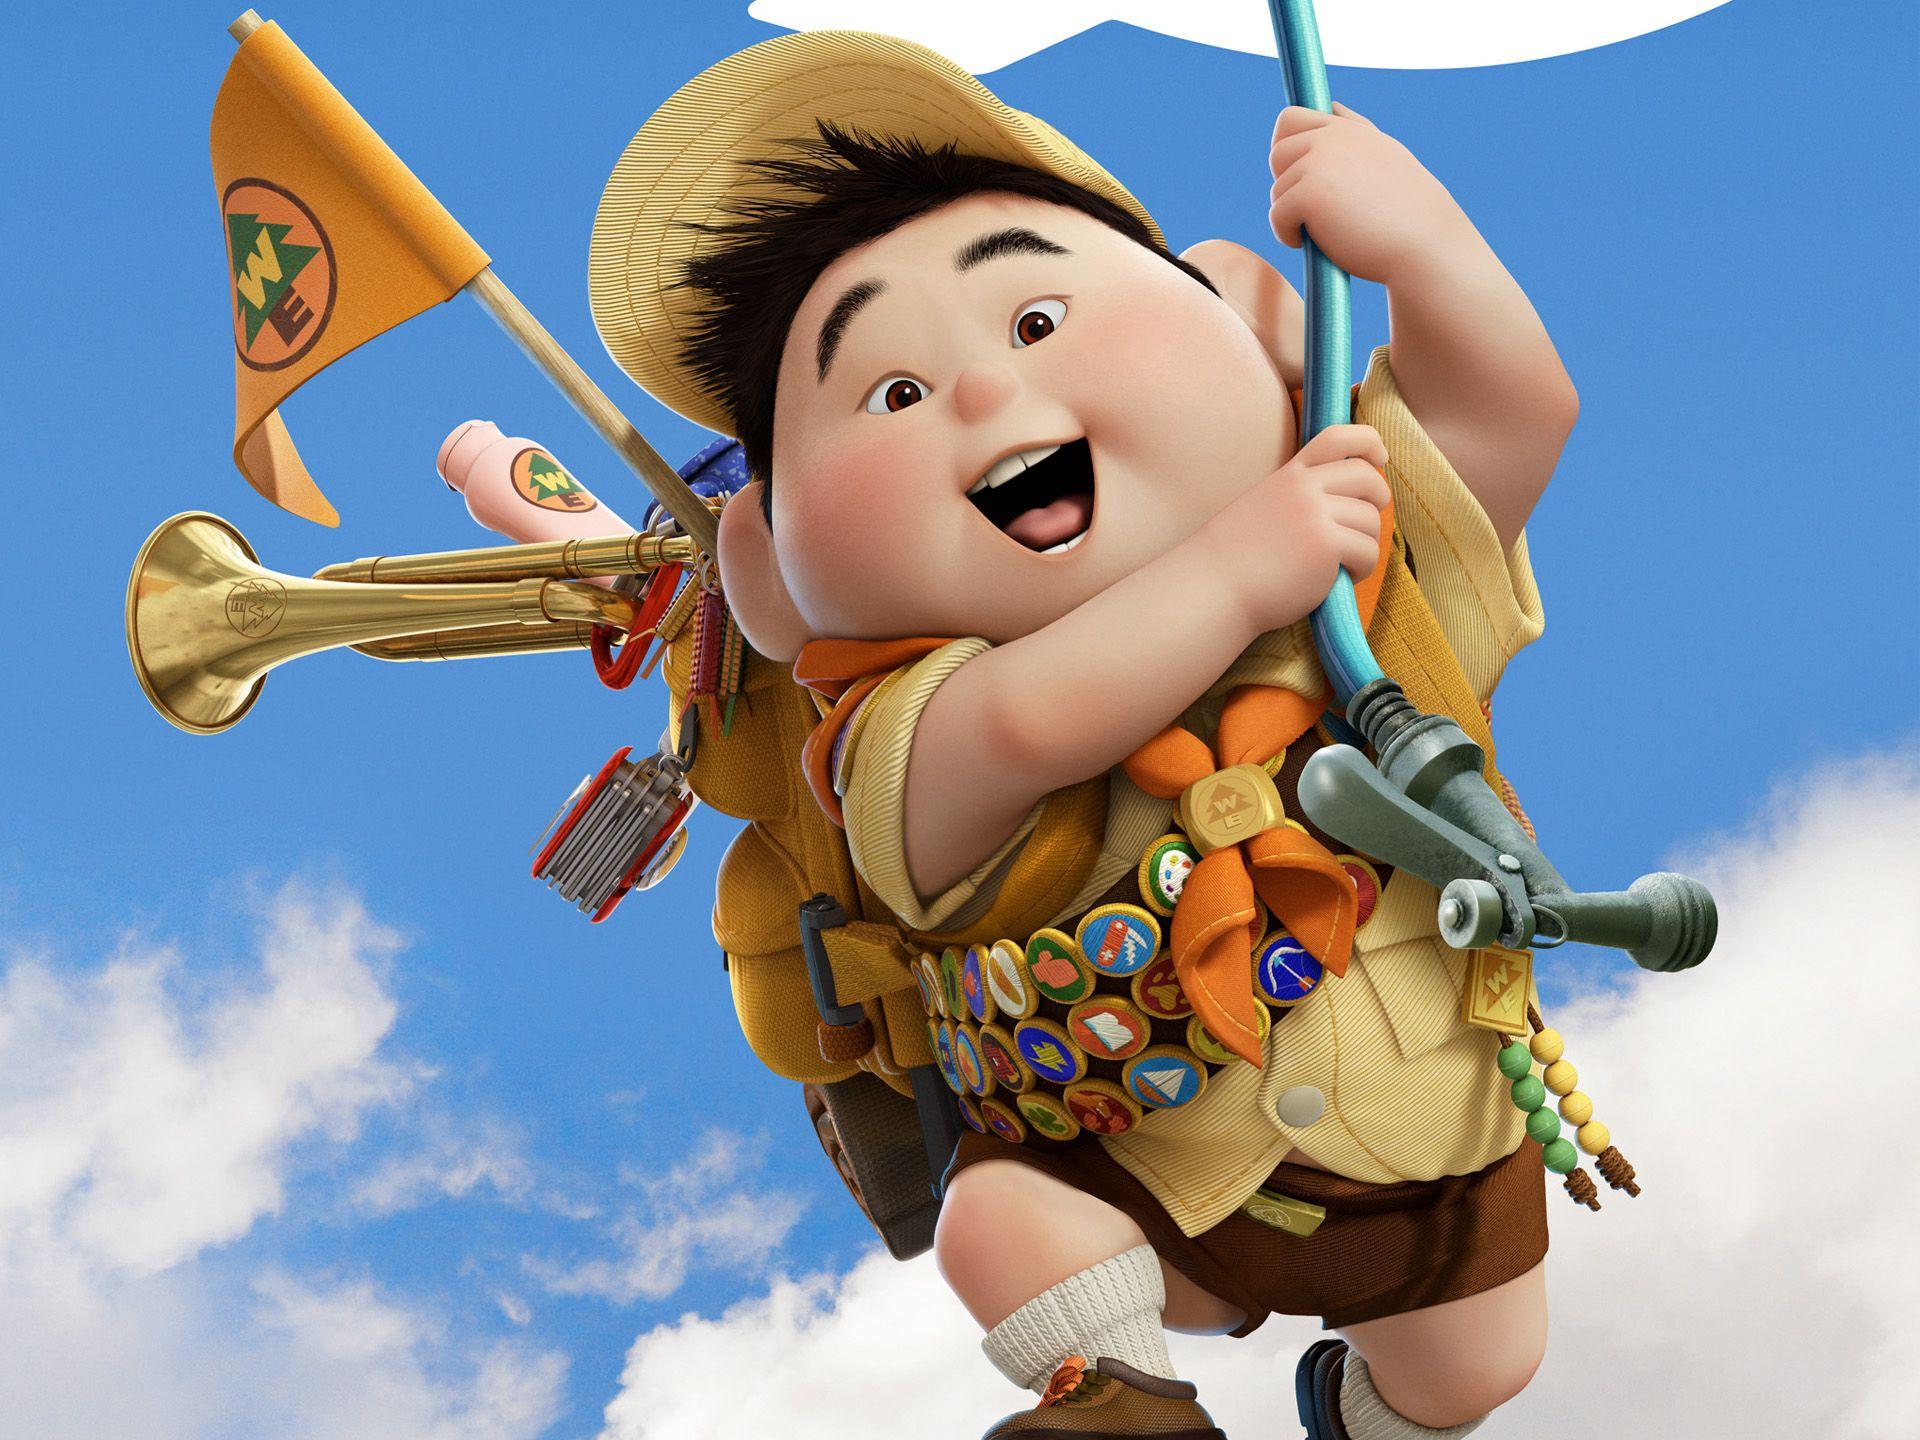 Russell Boy in Pixar's UP Wallpaper